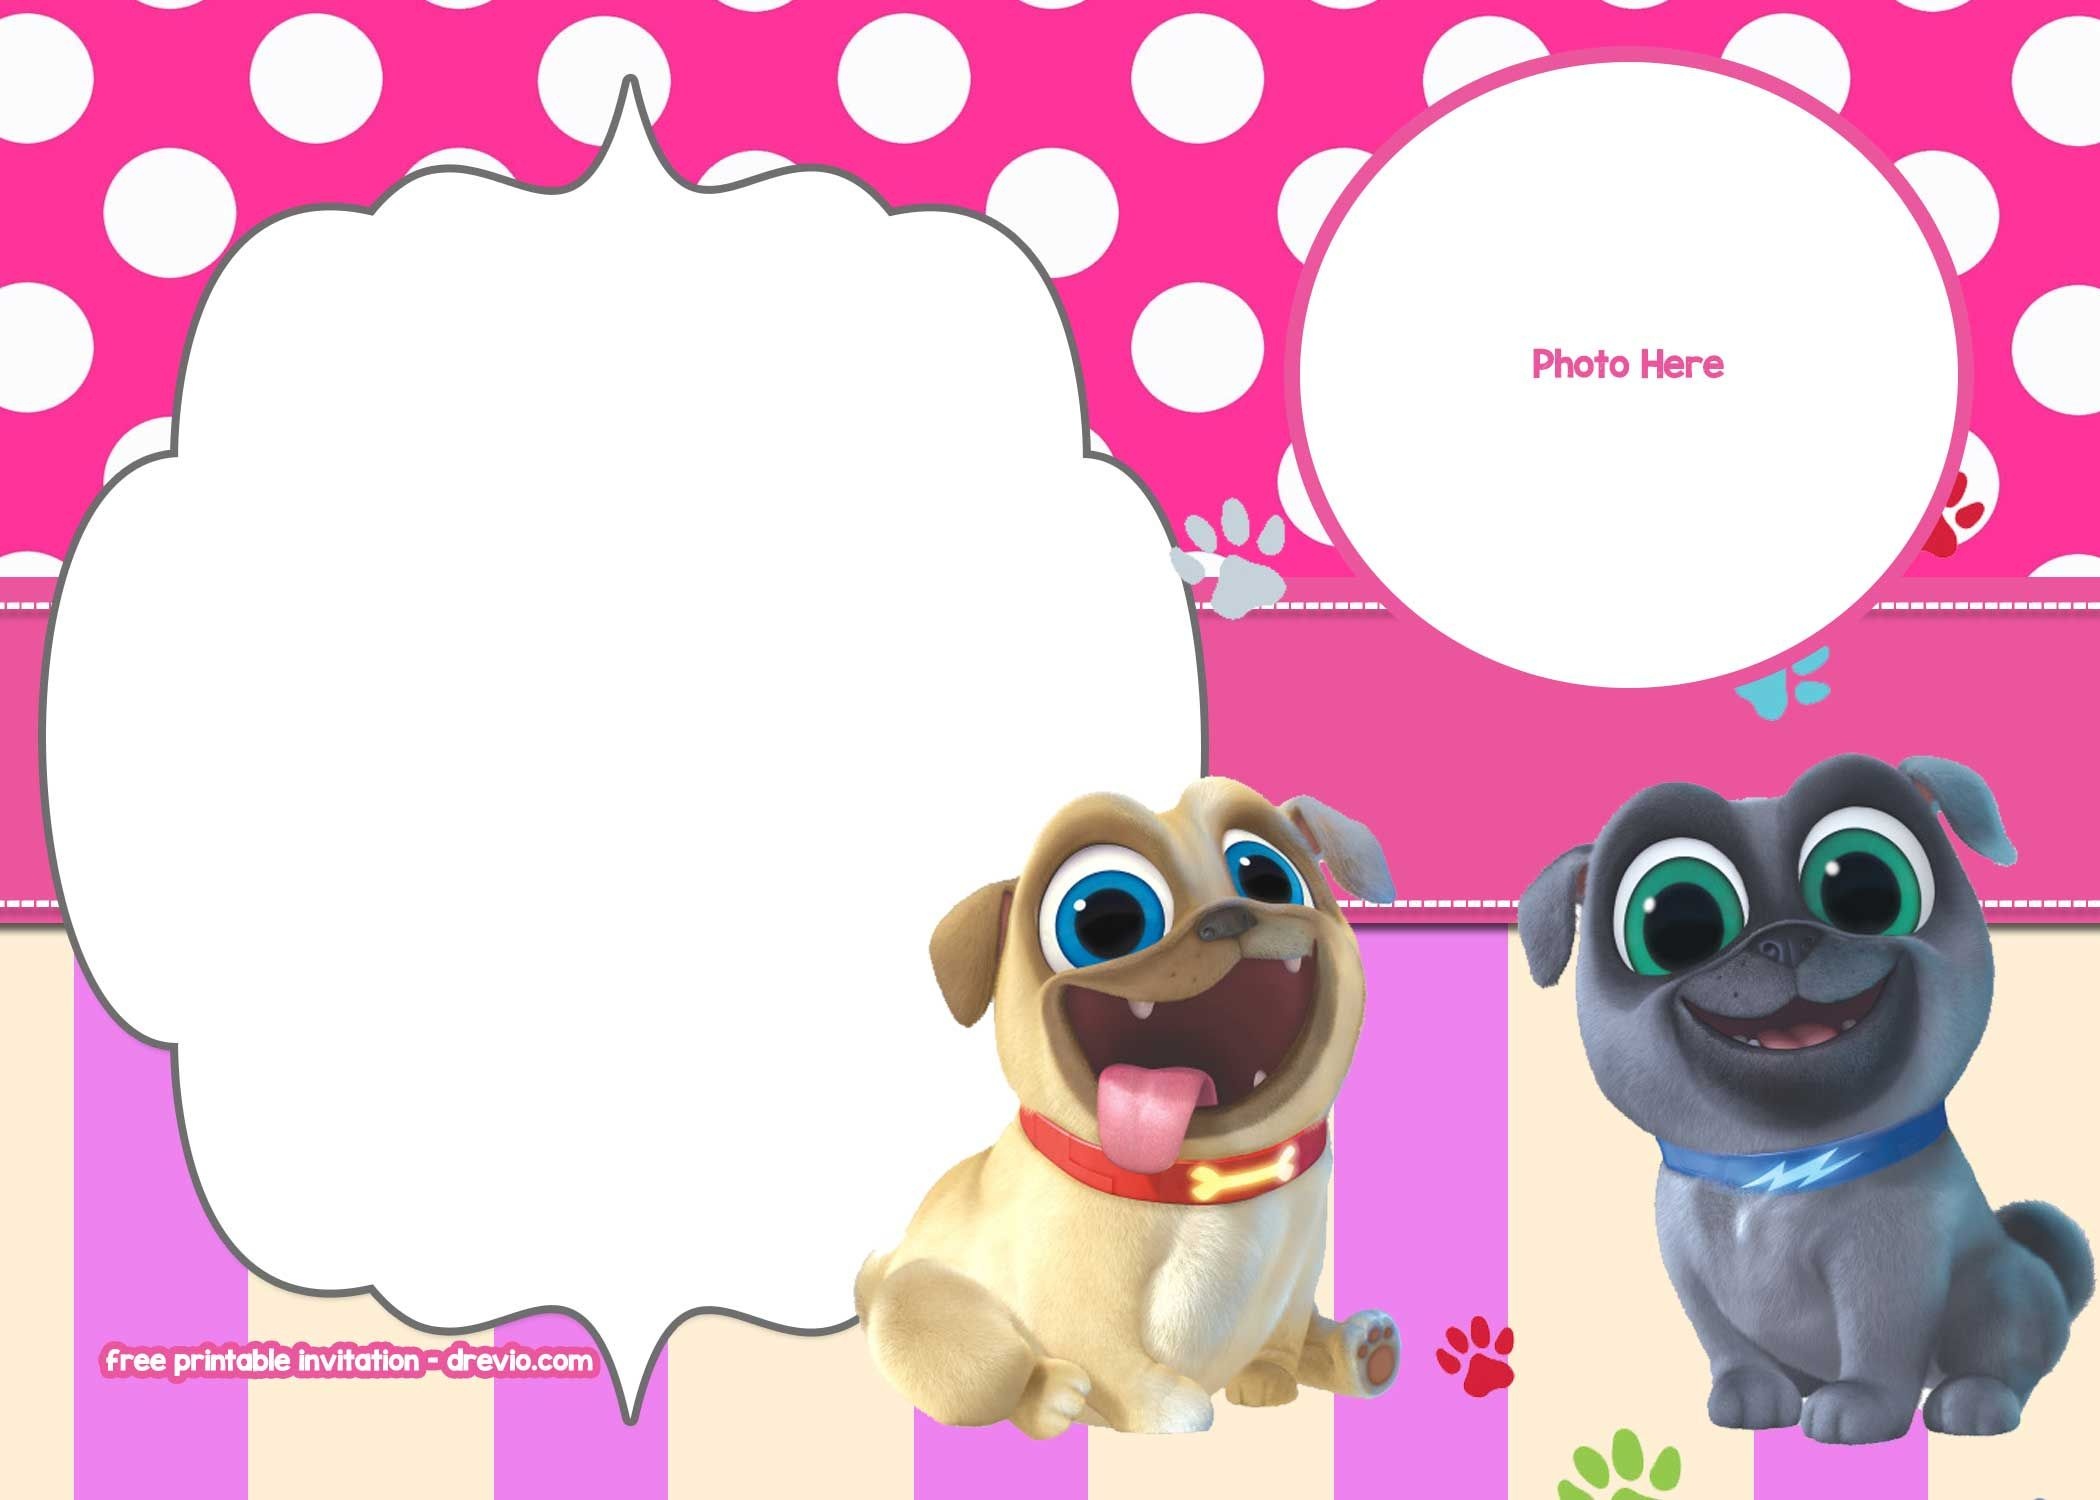 Free Disney Puppy Dog Pals Invitation Templates | Free Printable - Dog Birthday Invitations Free Printable